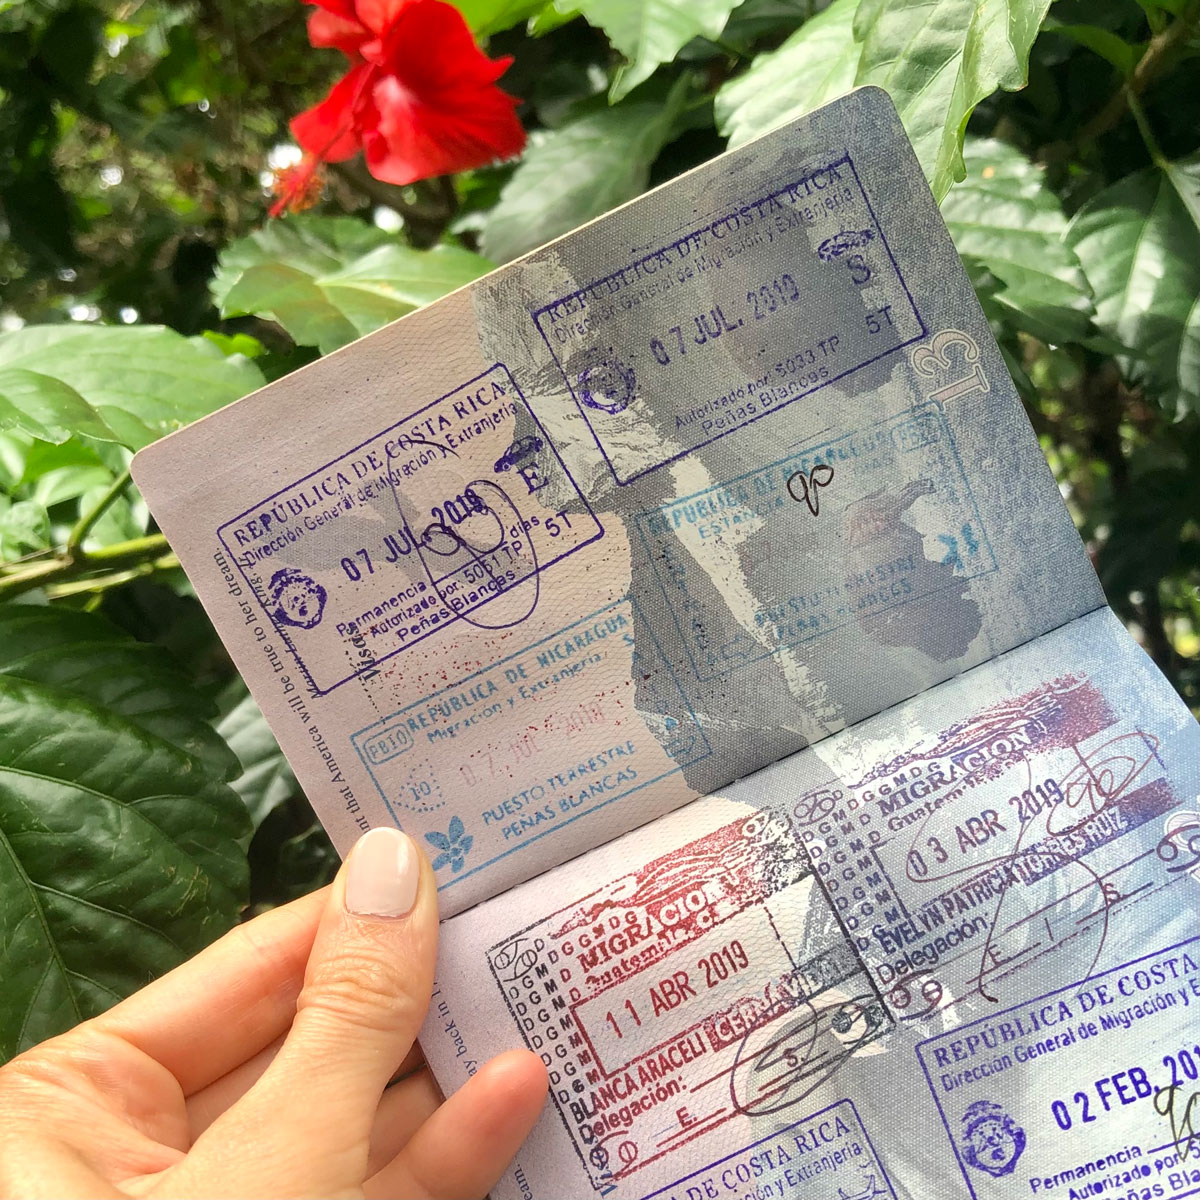 Digital nomad виза. Малазийская Номад виза. Tourist visa. Nicaragua e-visa. Visa Blanca Nicaragua.